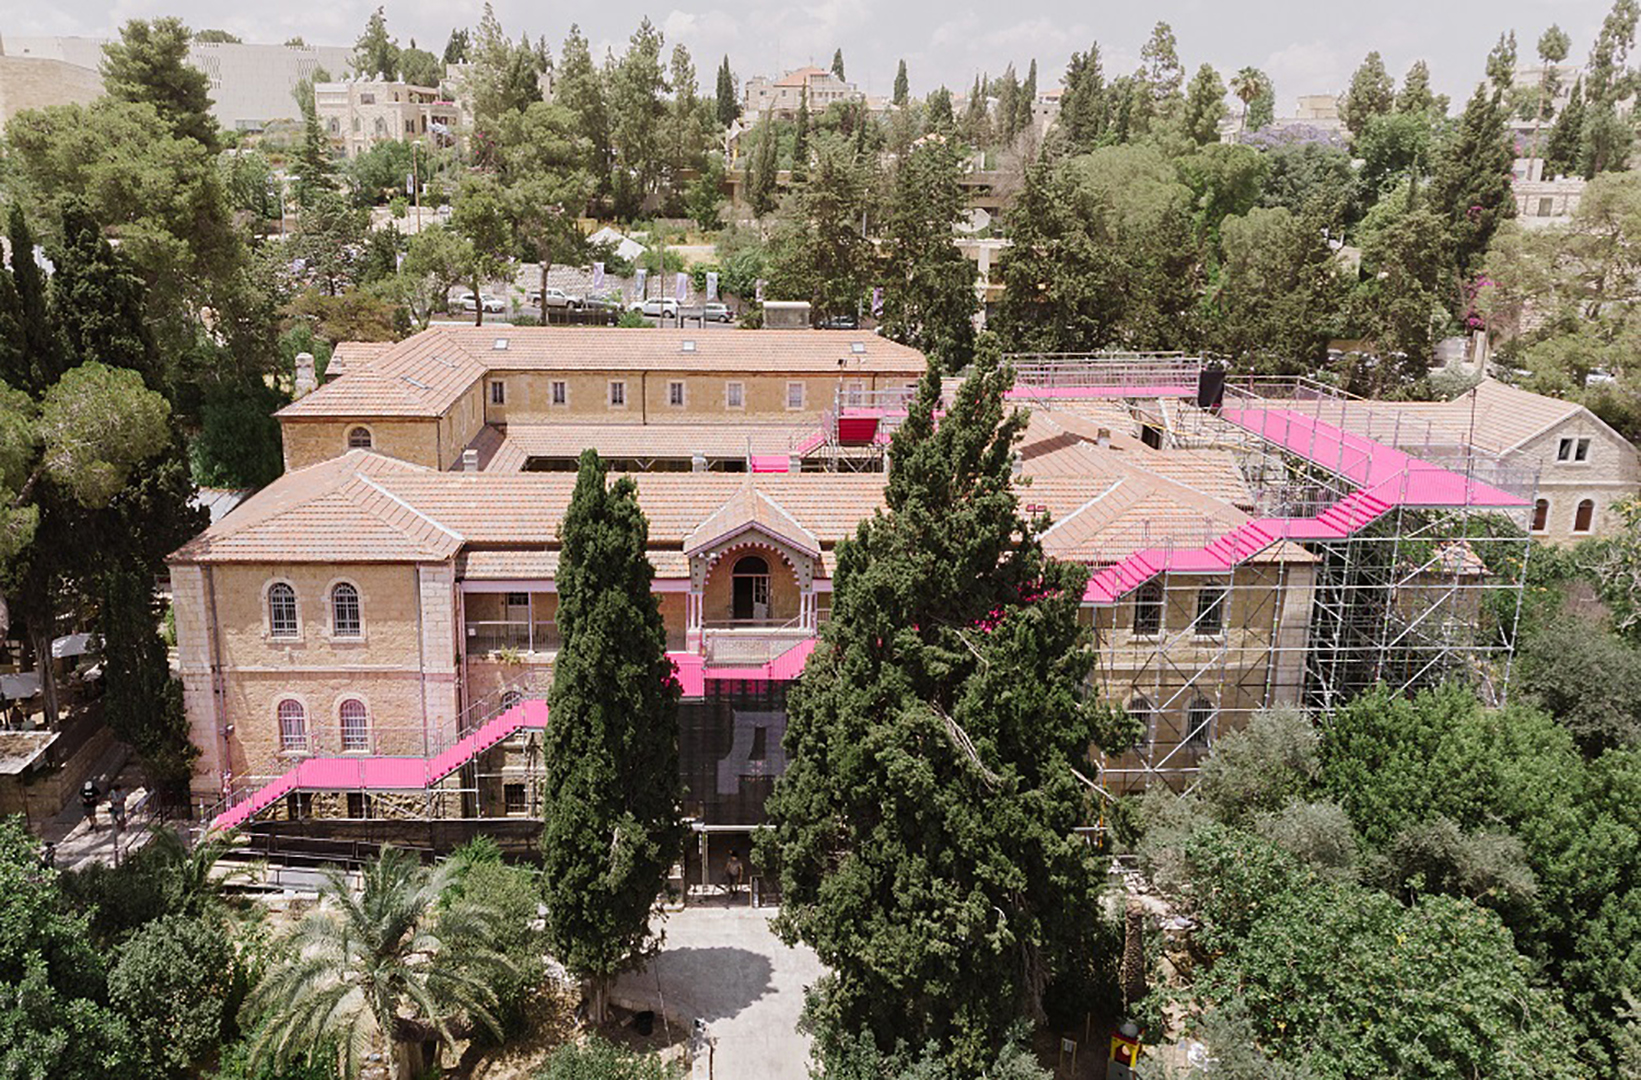 90 Degrees_HQ Architects_Jerusalem Design Week_Photography by Dor Kedmi_1.jpg